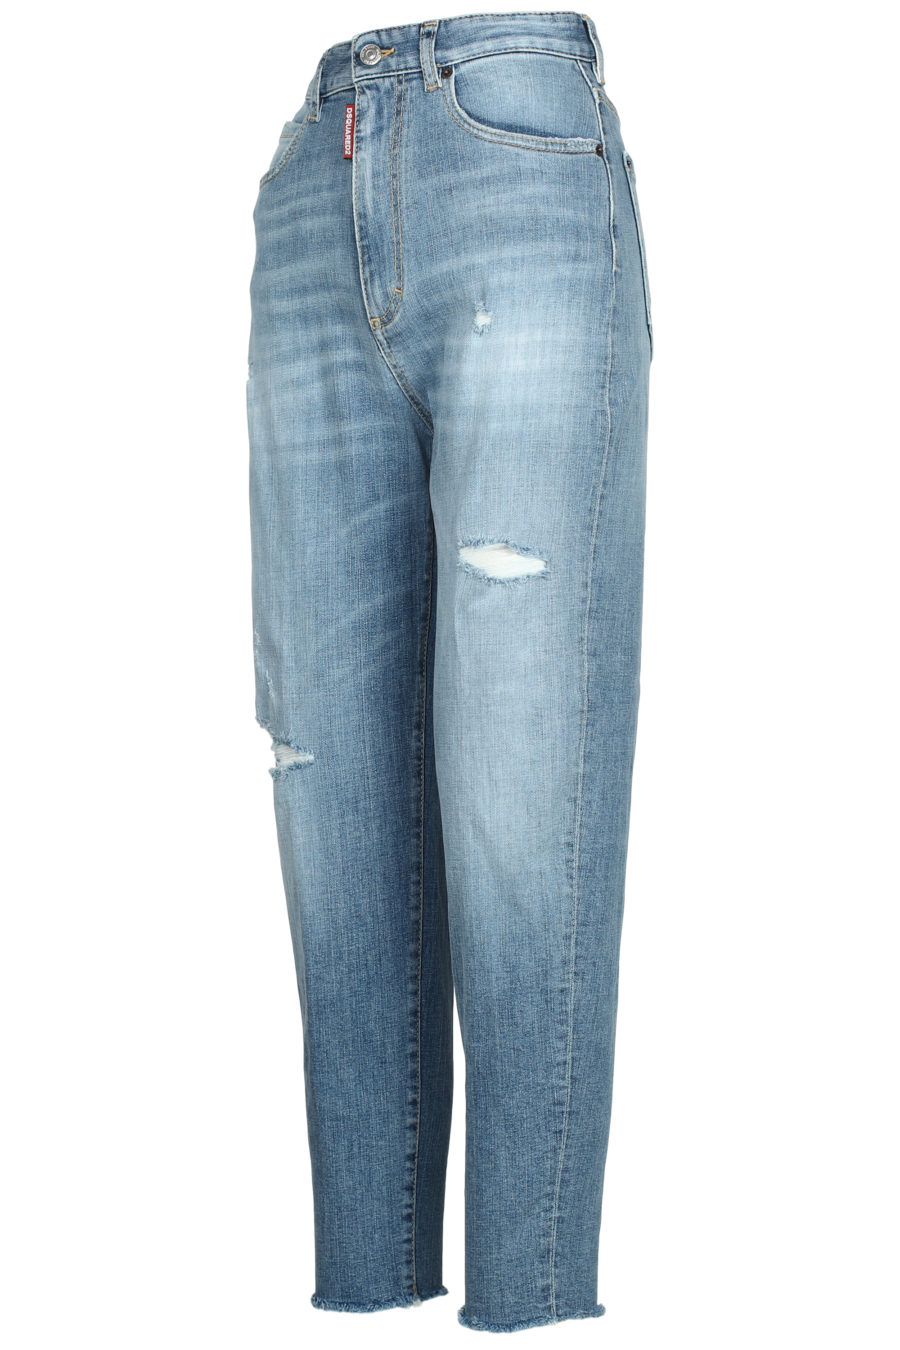 Pantalón tejano azul claro "Sasoon jean" - IMG 5616